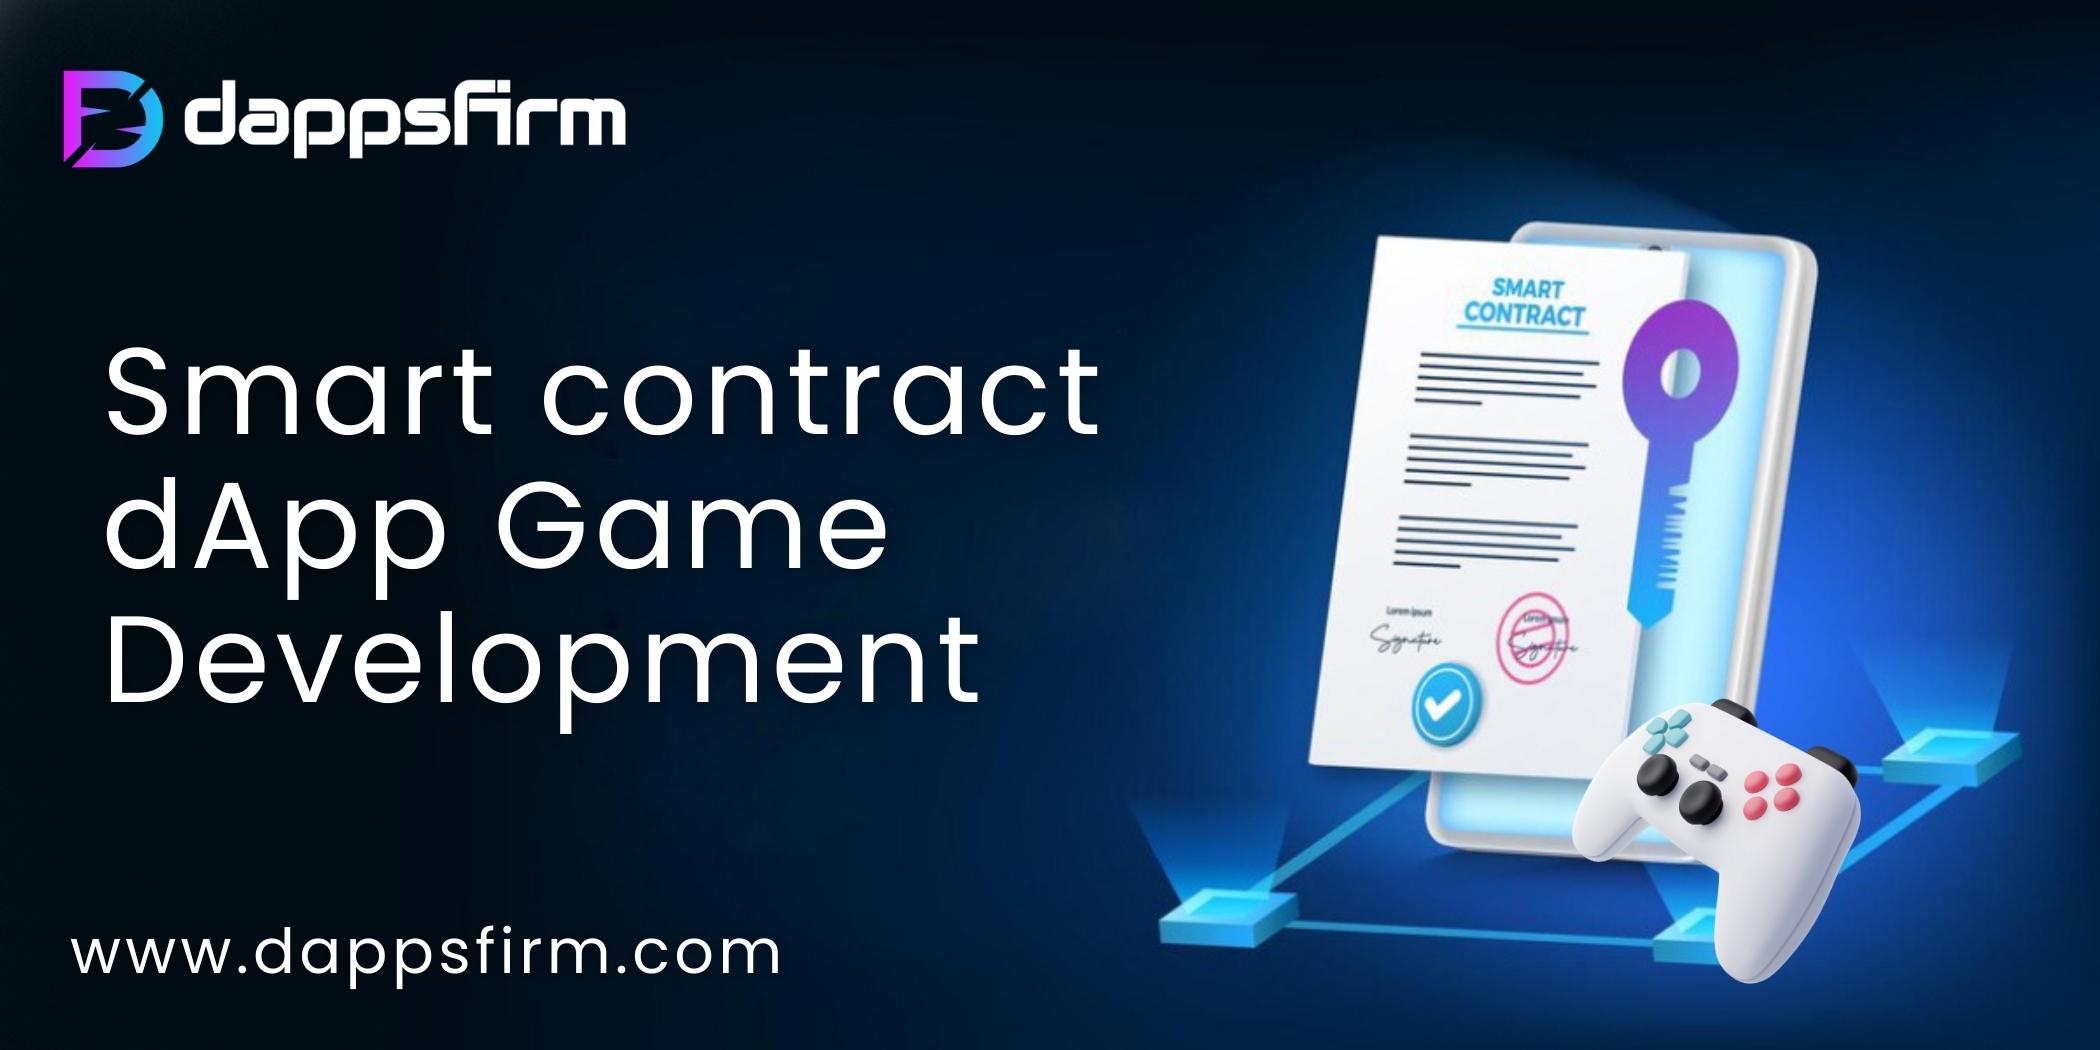 Smart Contract dApp Game Development To Develop An Engaging dApp Games with Smart Contracts